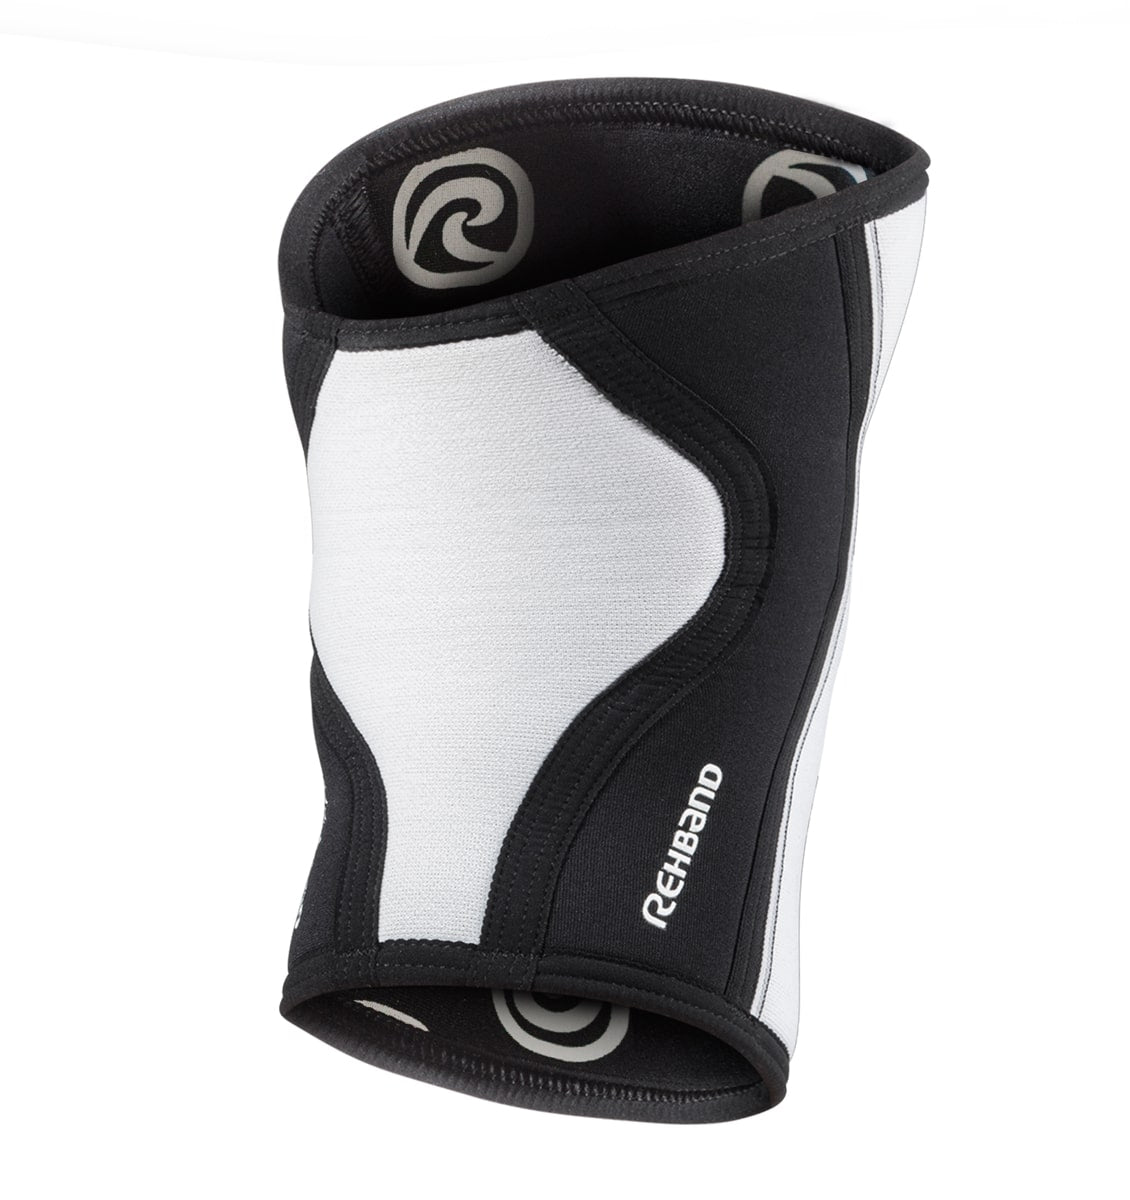 105401-01 - Rehband Rx Knee Sleeve - White/Black - 7mm - Back